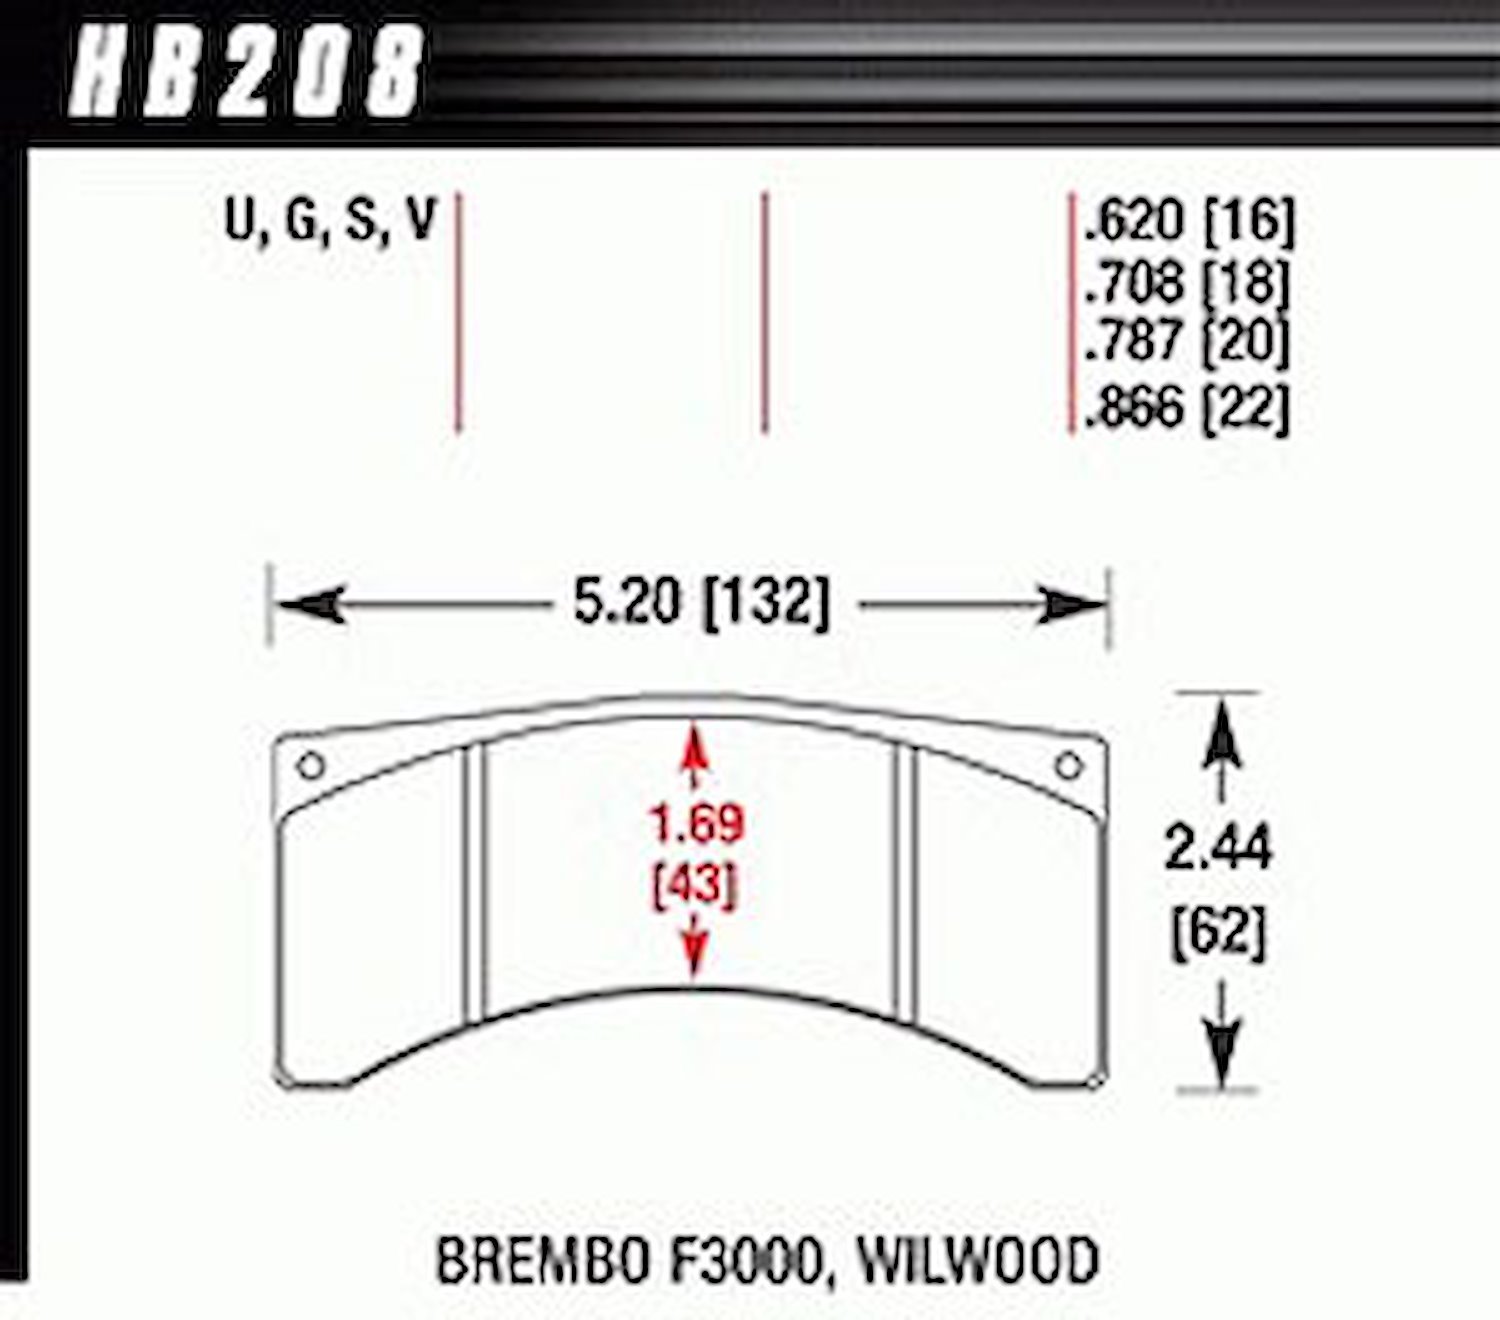 Disc Brake Pad DTC-70 w/0.620 Thickness